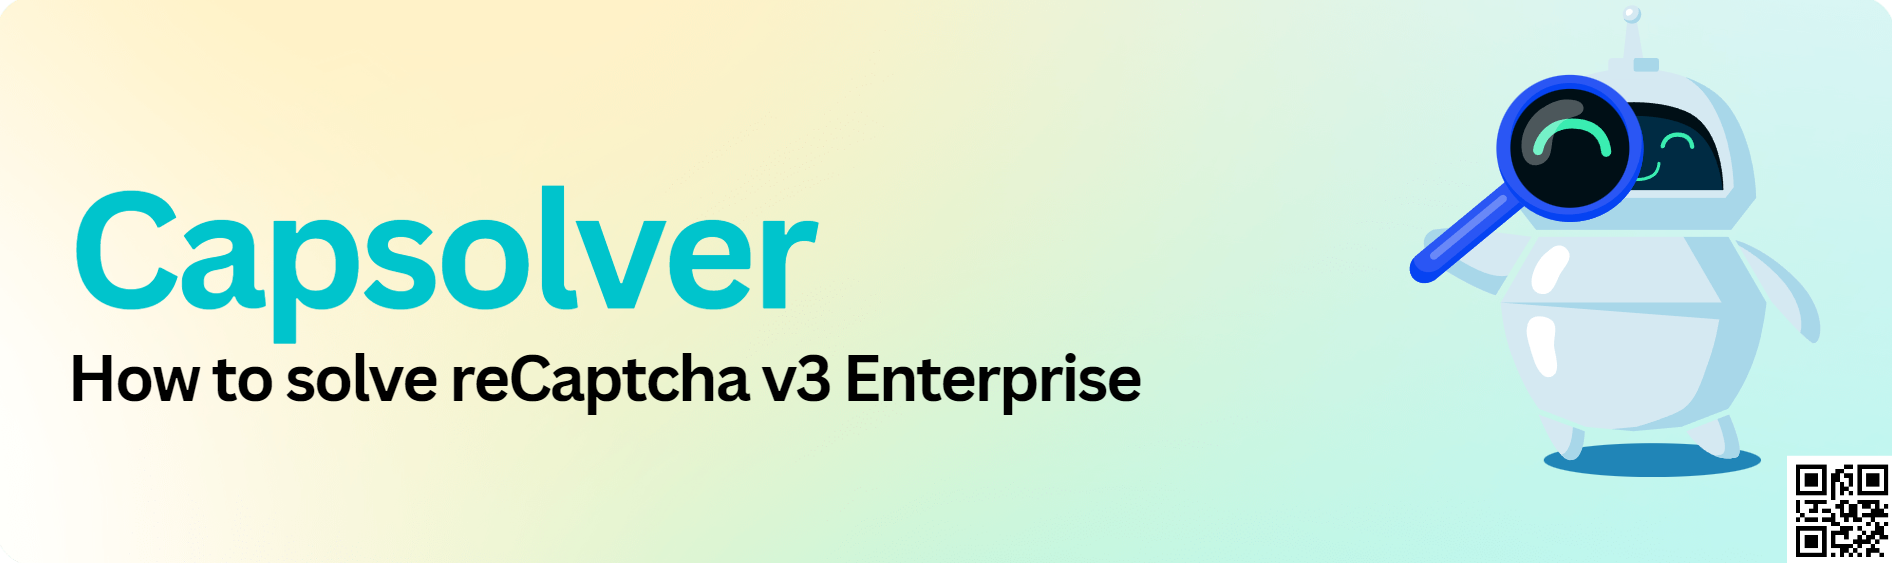 How to solve reCaptcha v3 enterprise